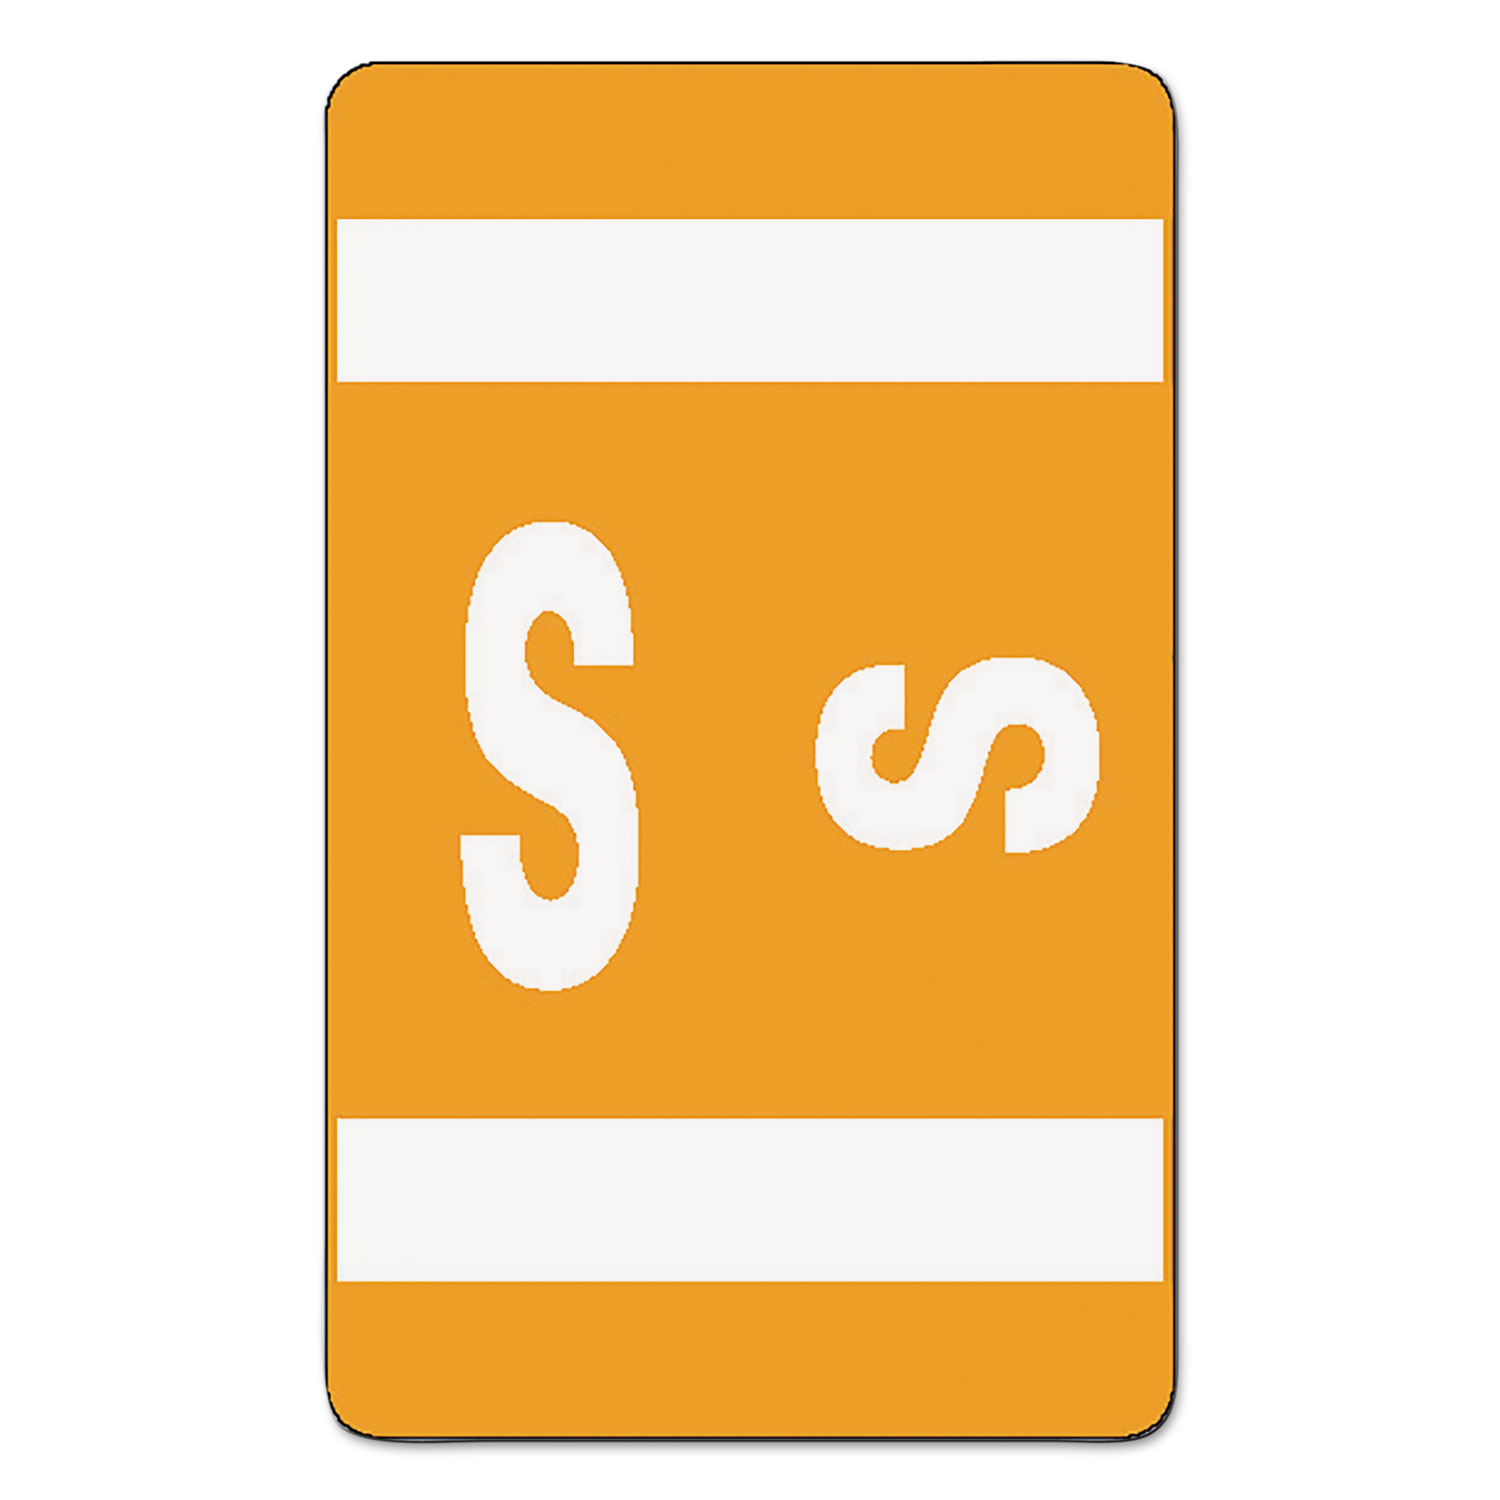  Smead 67189 AlphaZ Color-Coded Second Letter Alphabetical Labels, S, 1 x 1.63, Orange, 10/Sheet, 10 Sheets/Pack (SMD67189) 